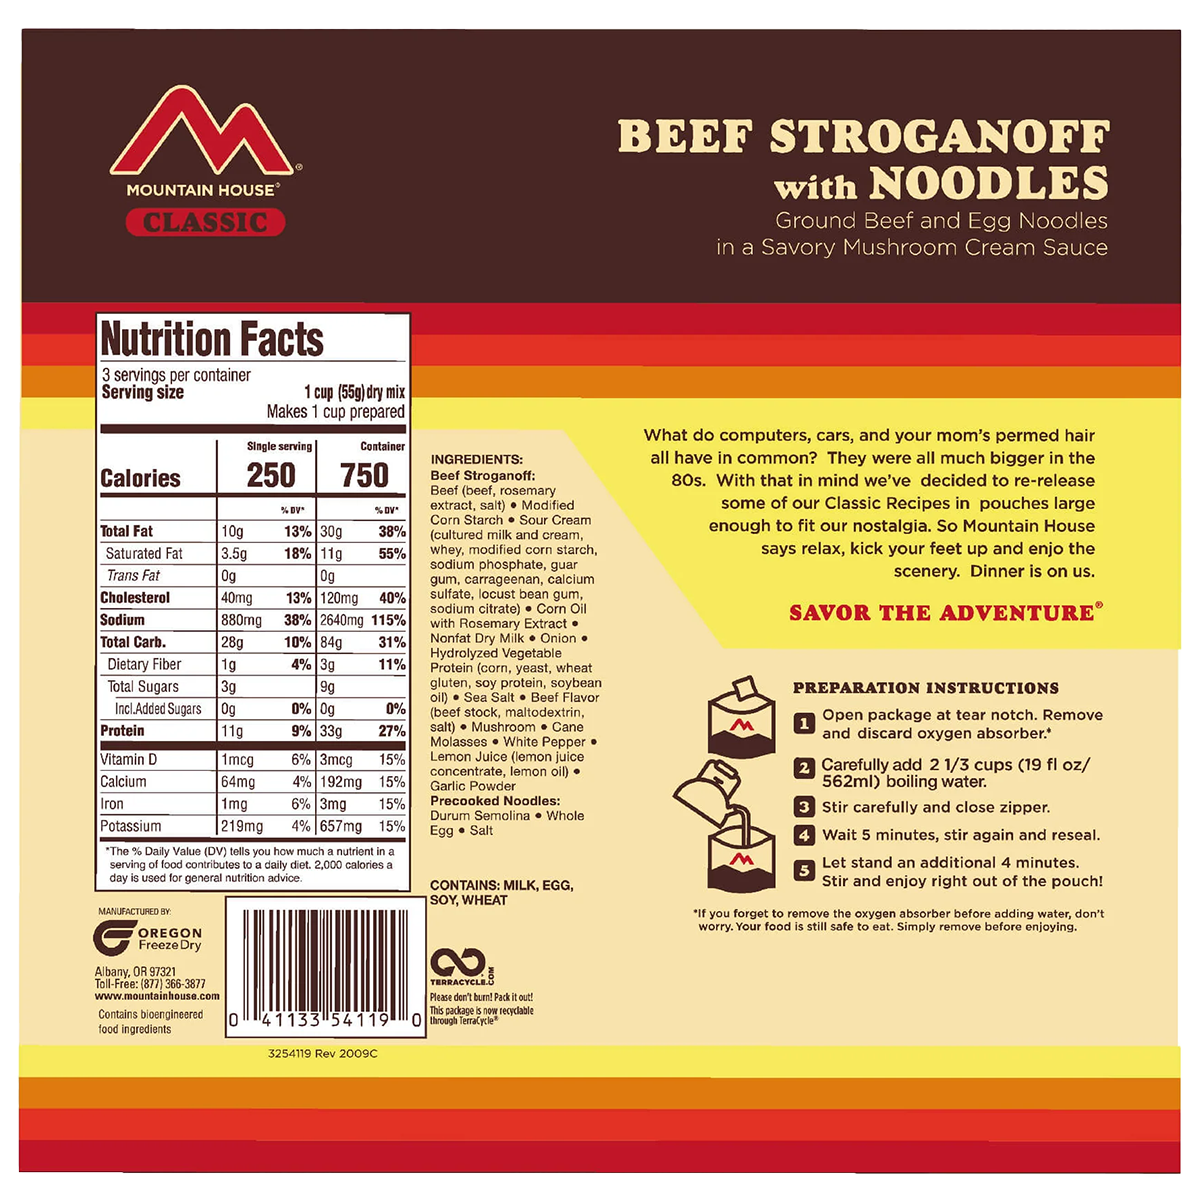 Beef Stroganoff with Noodles alternate view